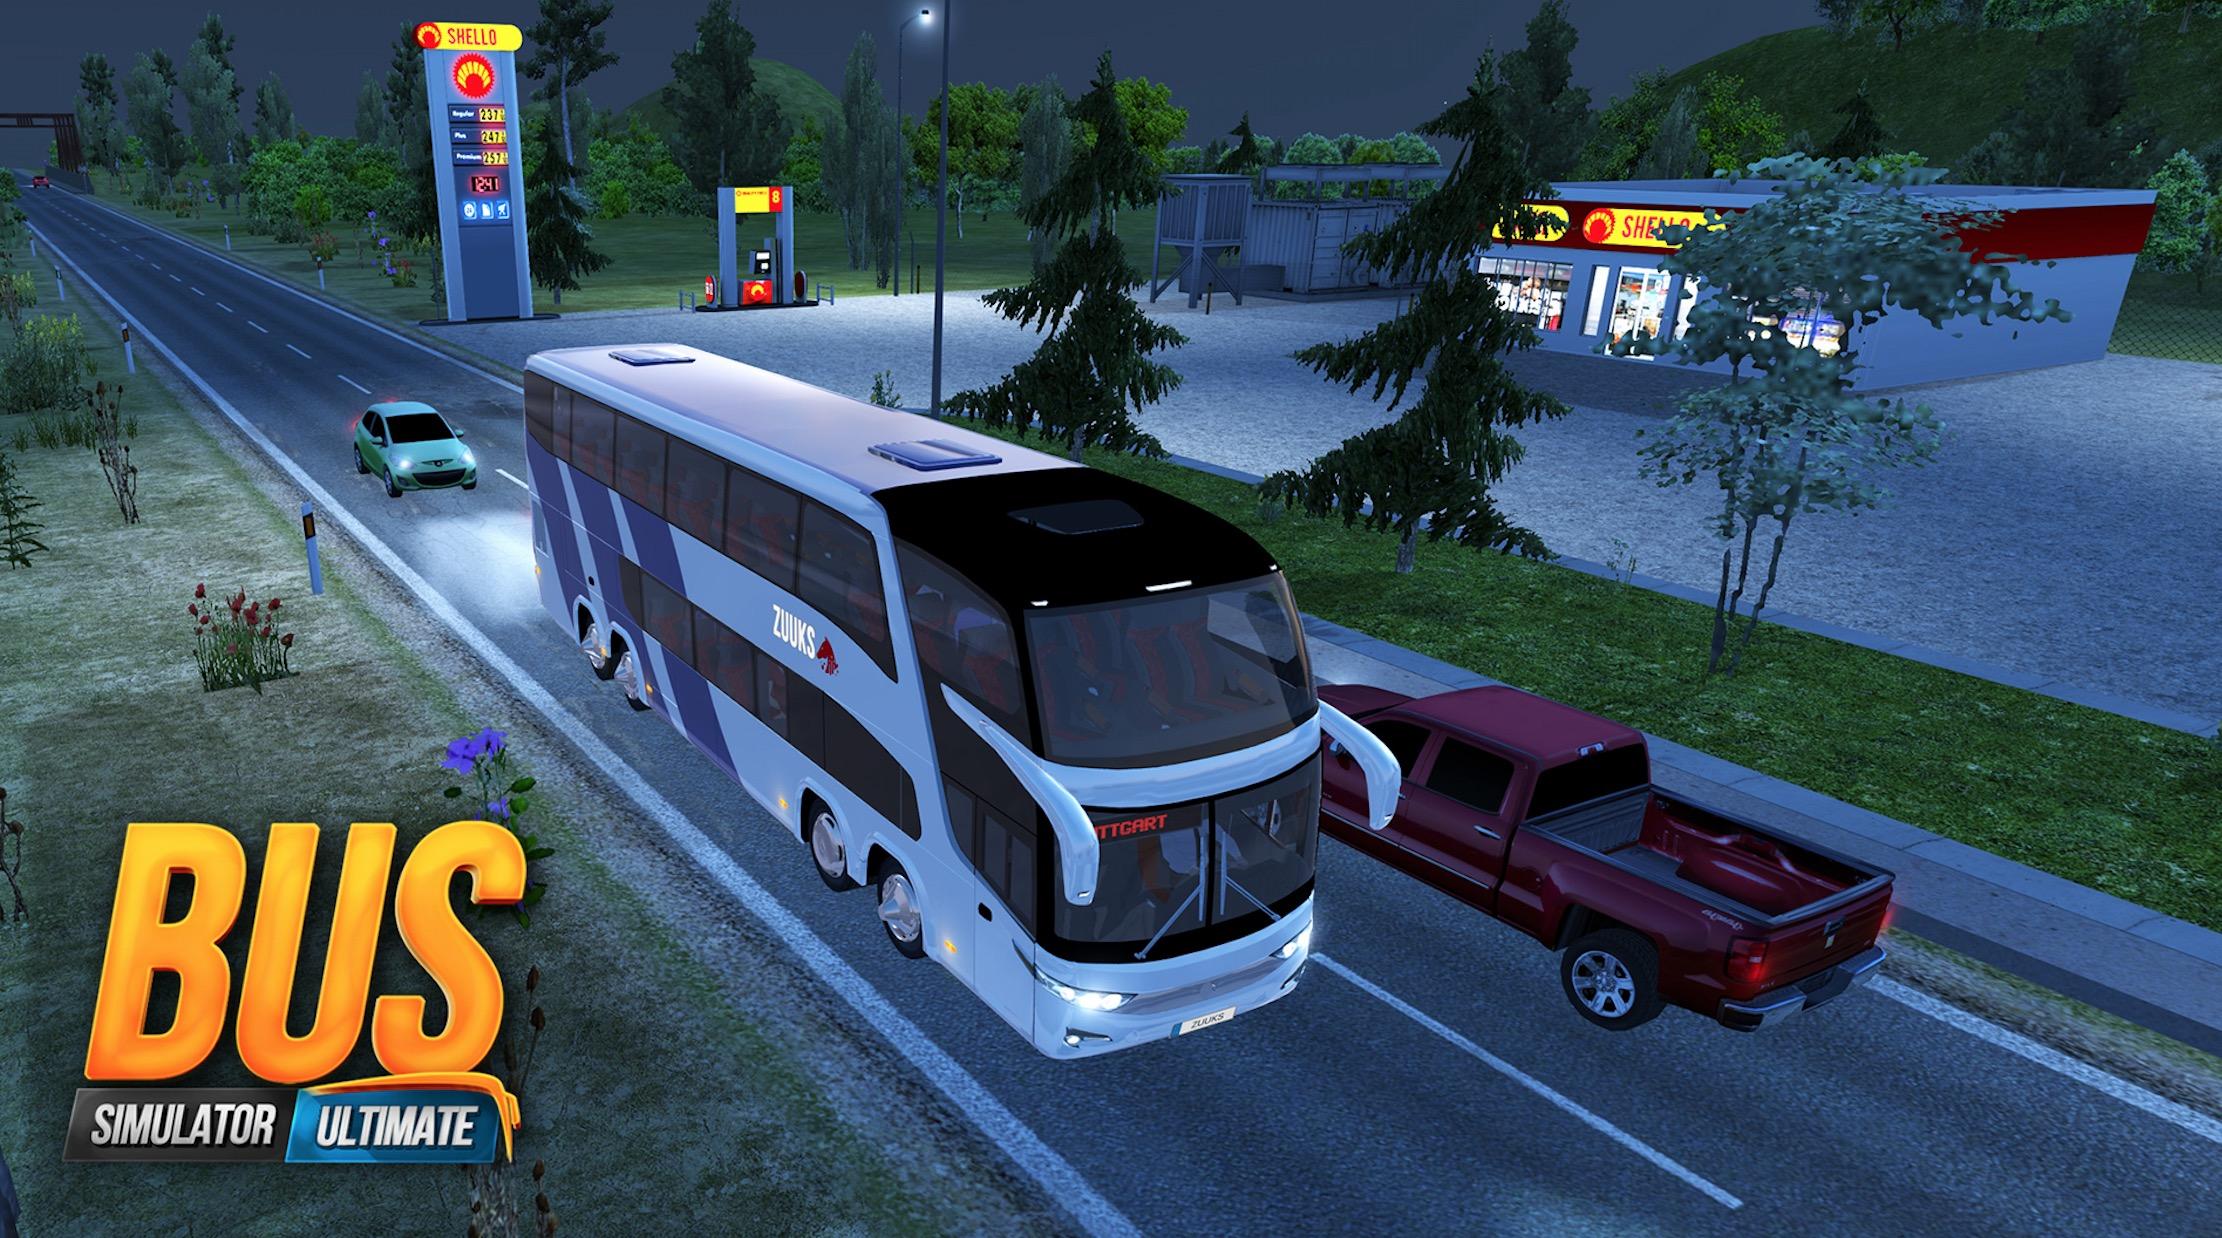 Включи игру бас. Симулятор автобуса Ultimate. Игра автобус ультимейт. Бус симулятор ультимейт. Bus Simulator Ultimate автобусы.